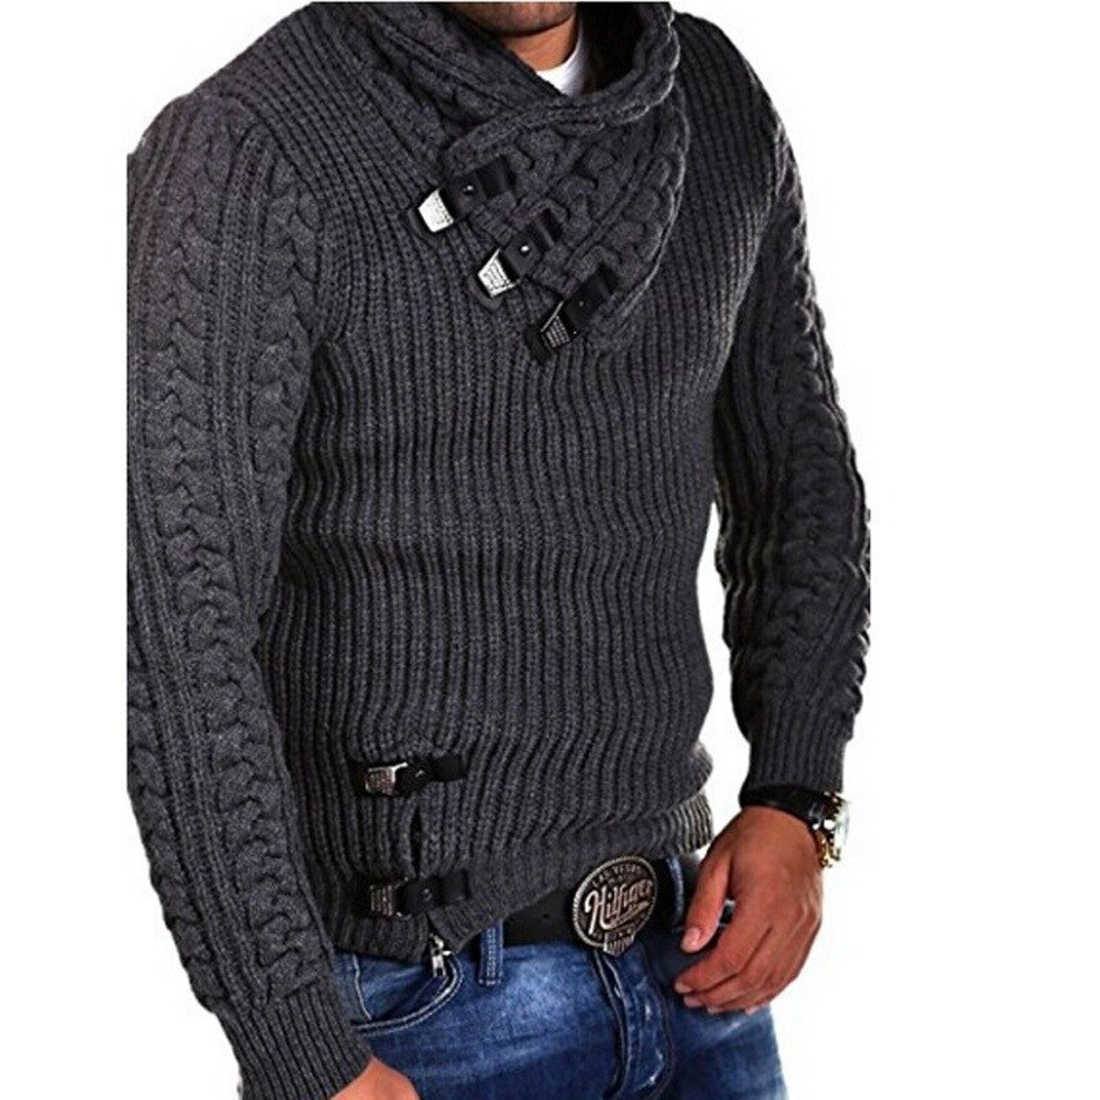 Men's Autumn/Winter Warm Knitted Sweater